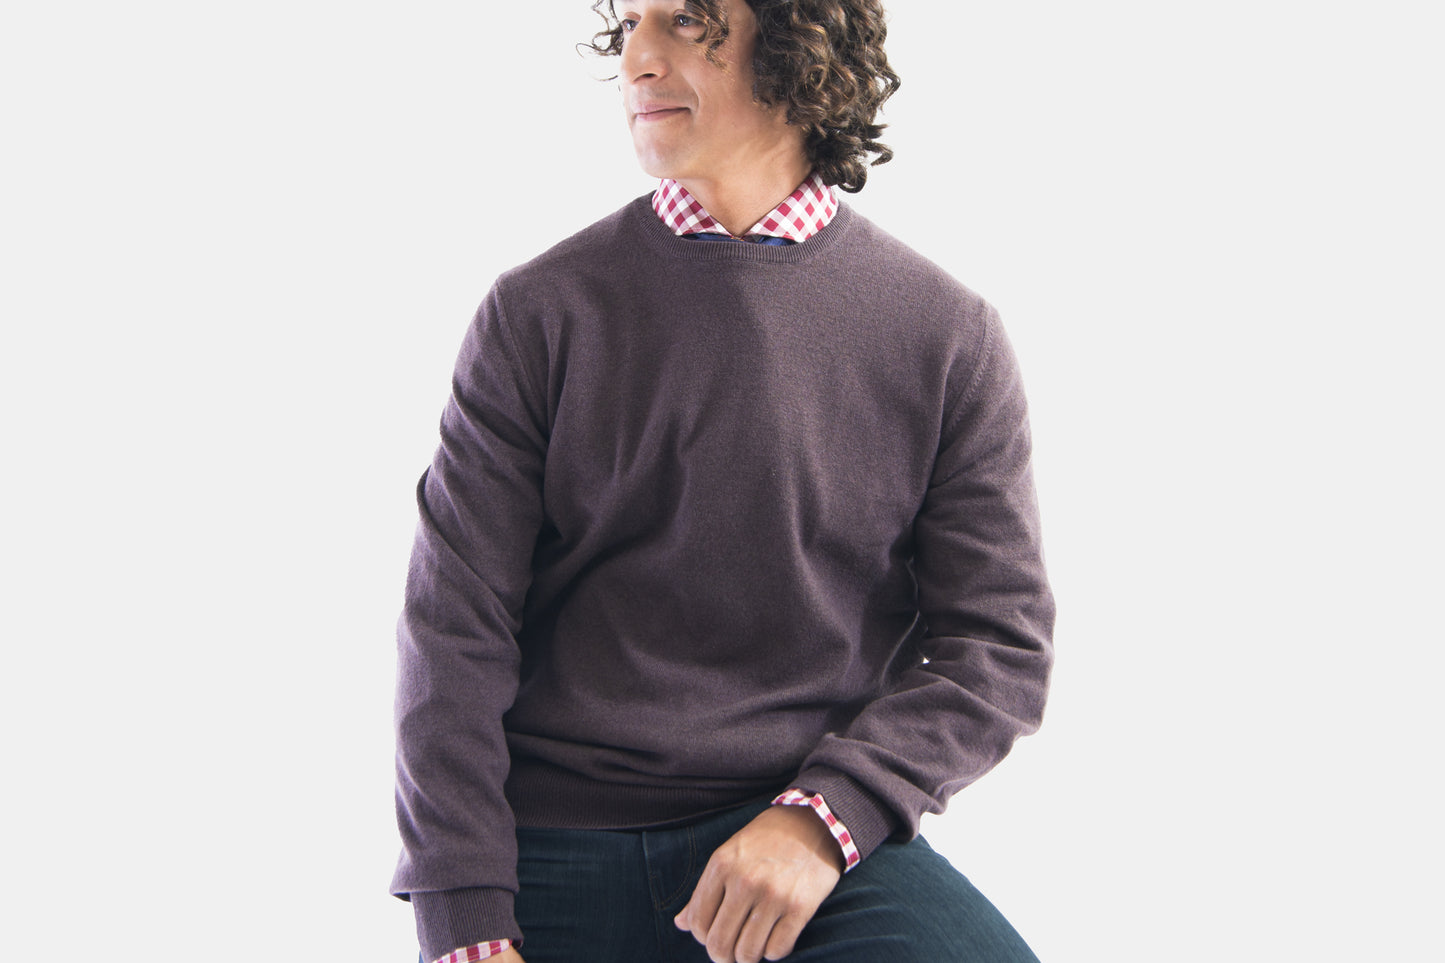 khakis of Carmel - wine colored knitted sweatshirt